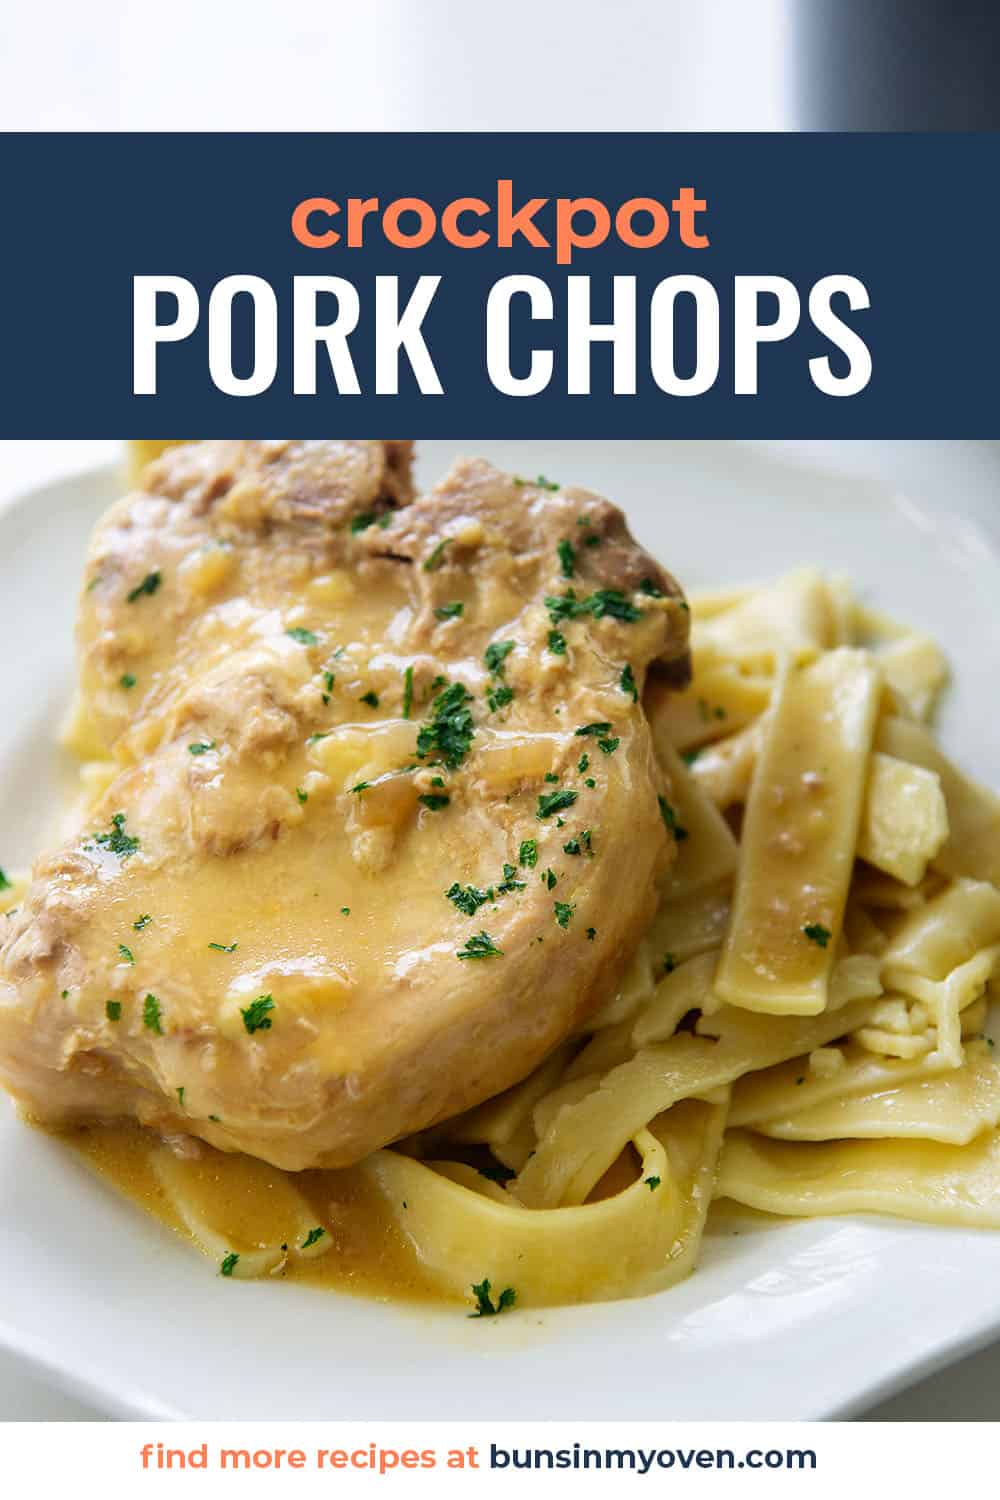 crockpot pork chops on white plate.